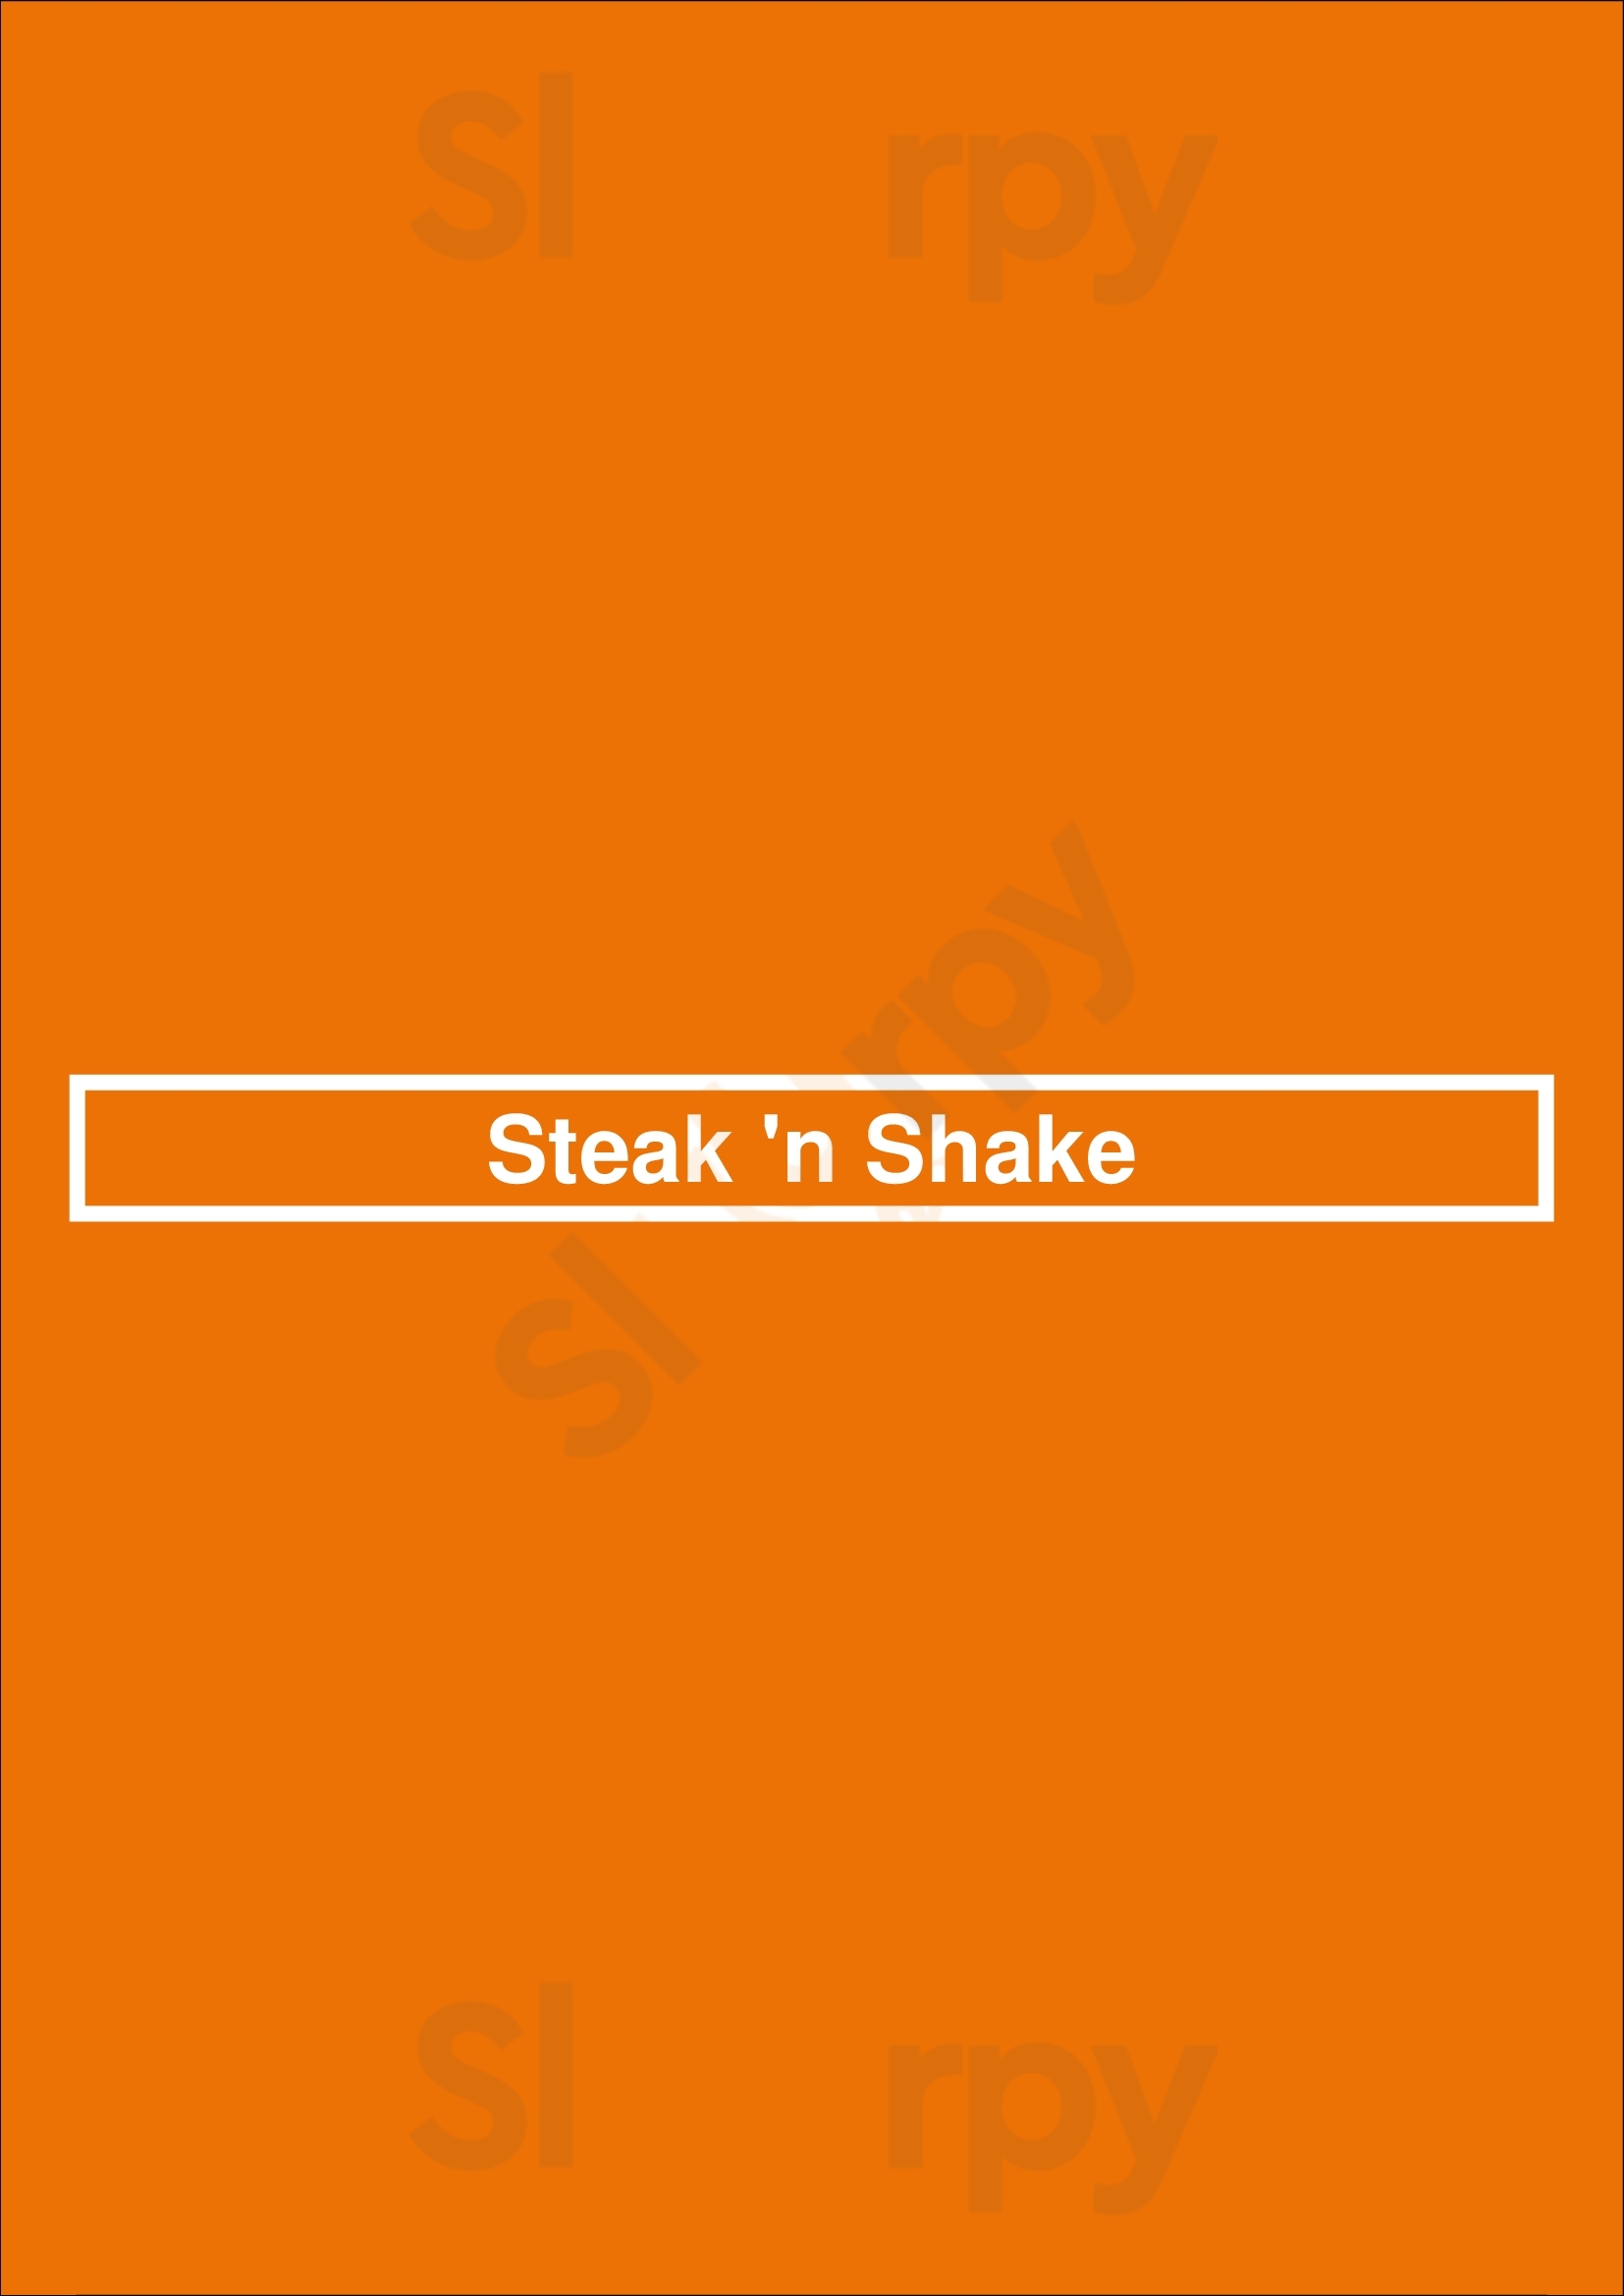 Steak 'n Shake Columbus Menu - 1